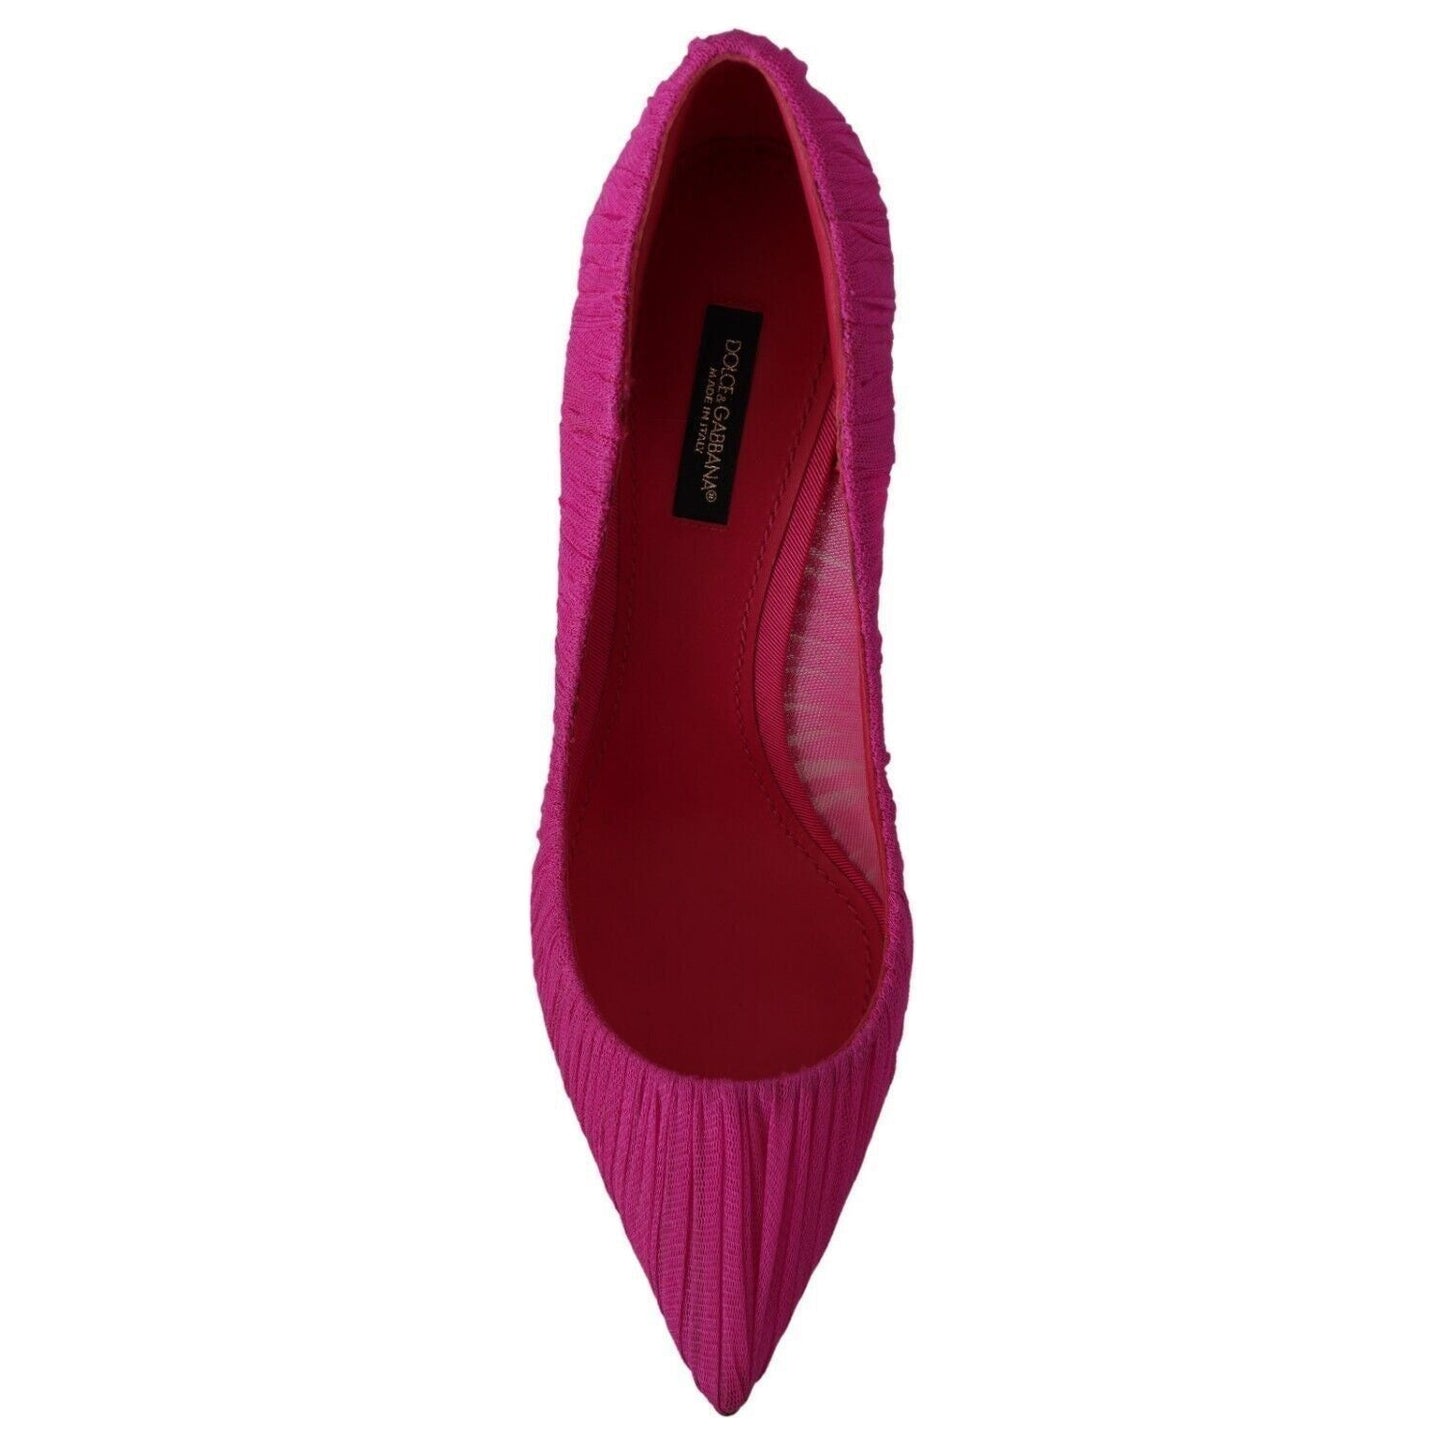 Dolce & Gabbana Elegant Pink Tulle Mesh Heels Pumps pink-tulle-stiletto-high-heels-pumps-shoes s-l1600-6-17-ad977791-e7f.jpg